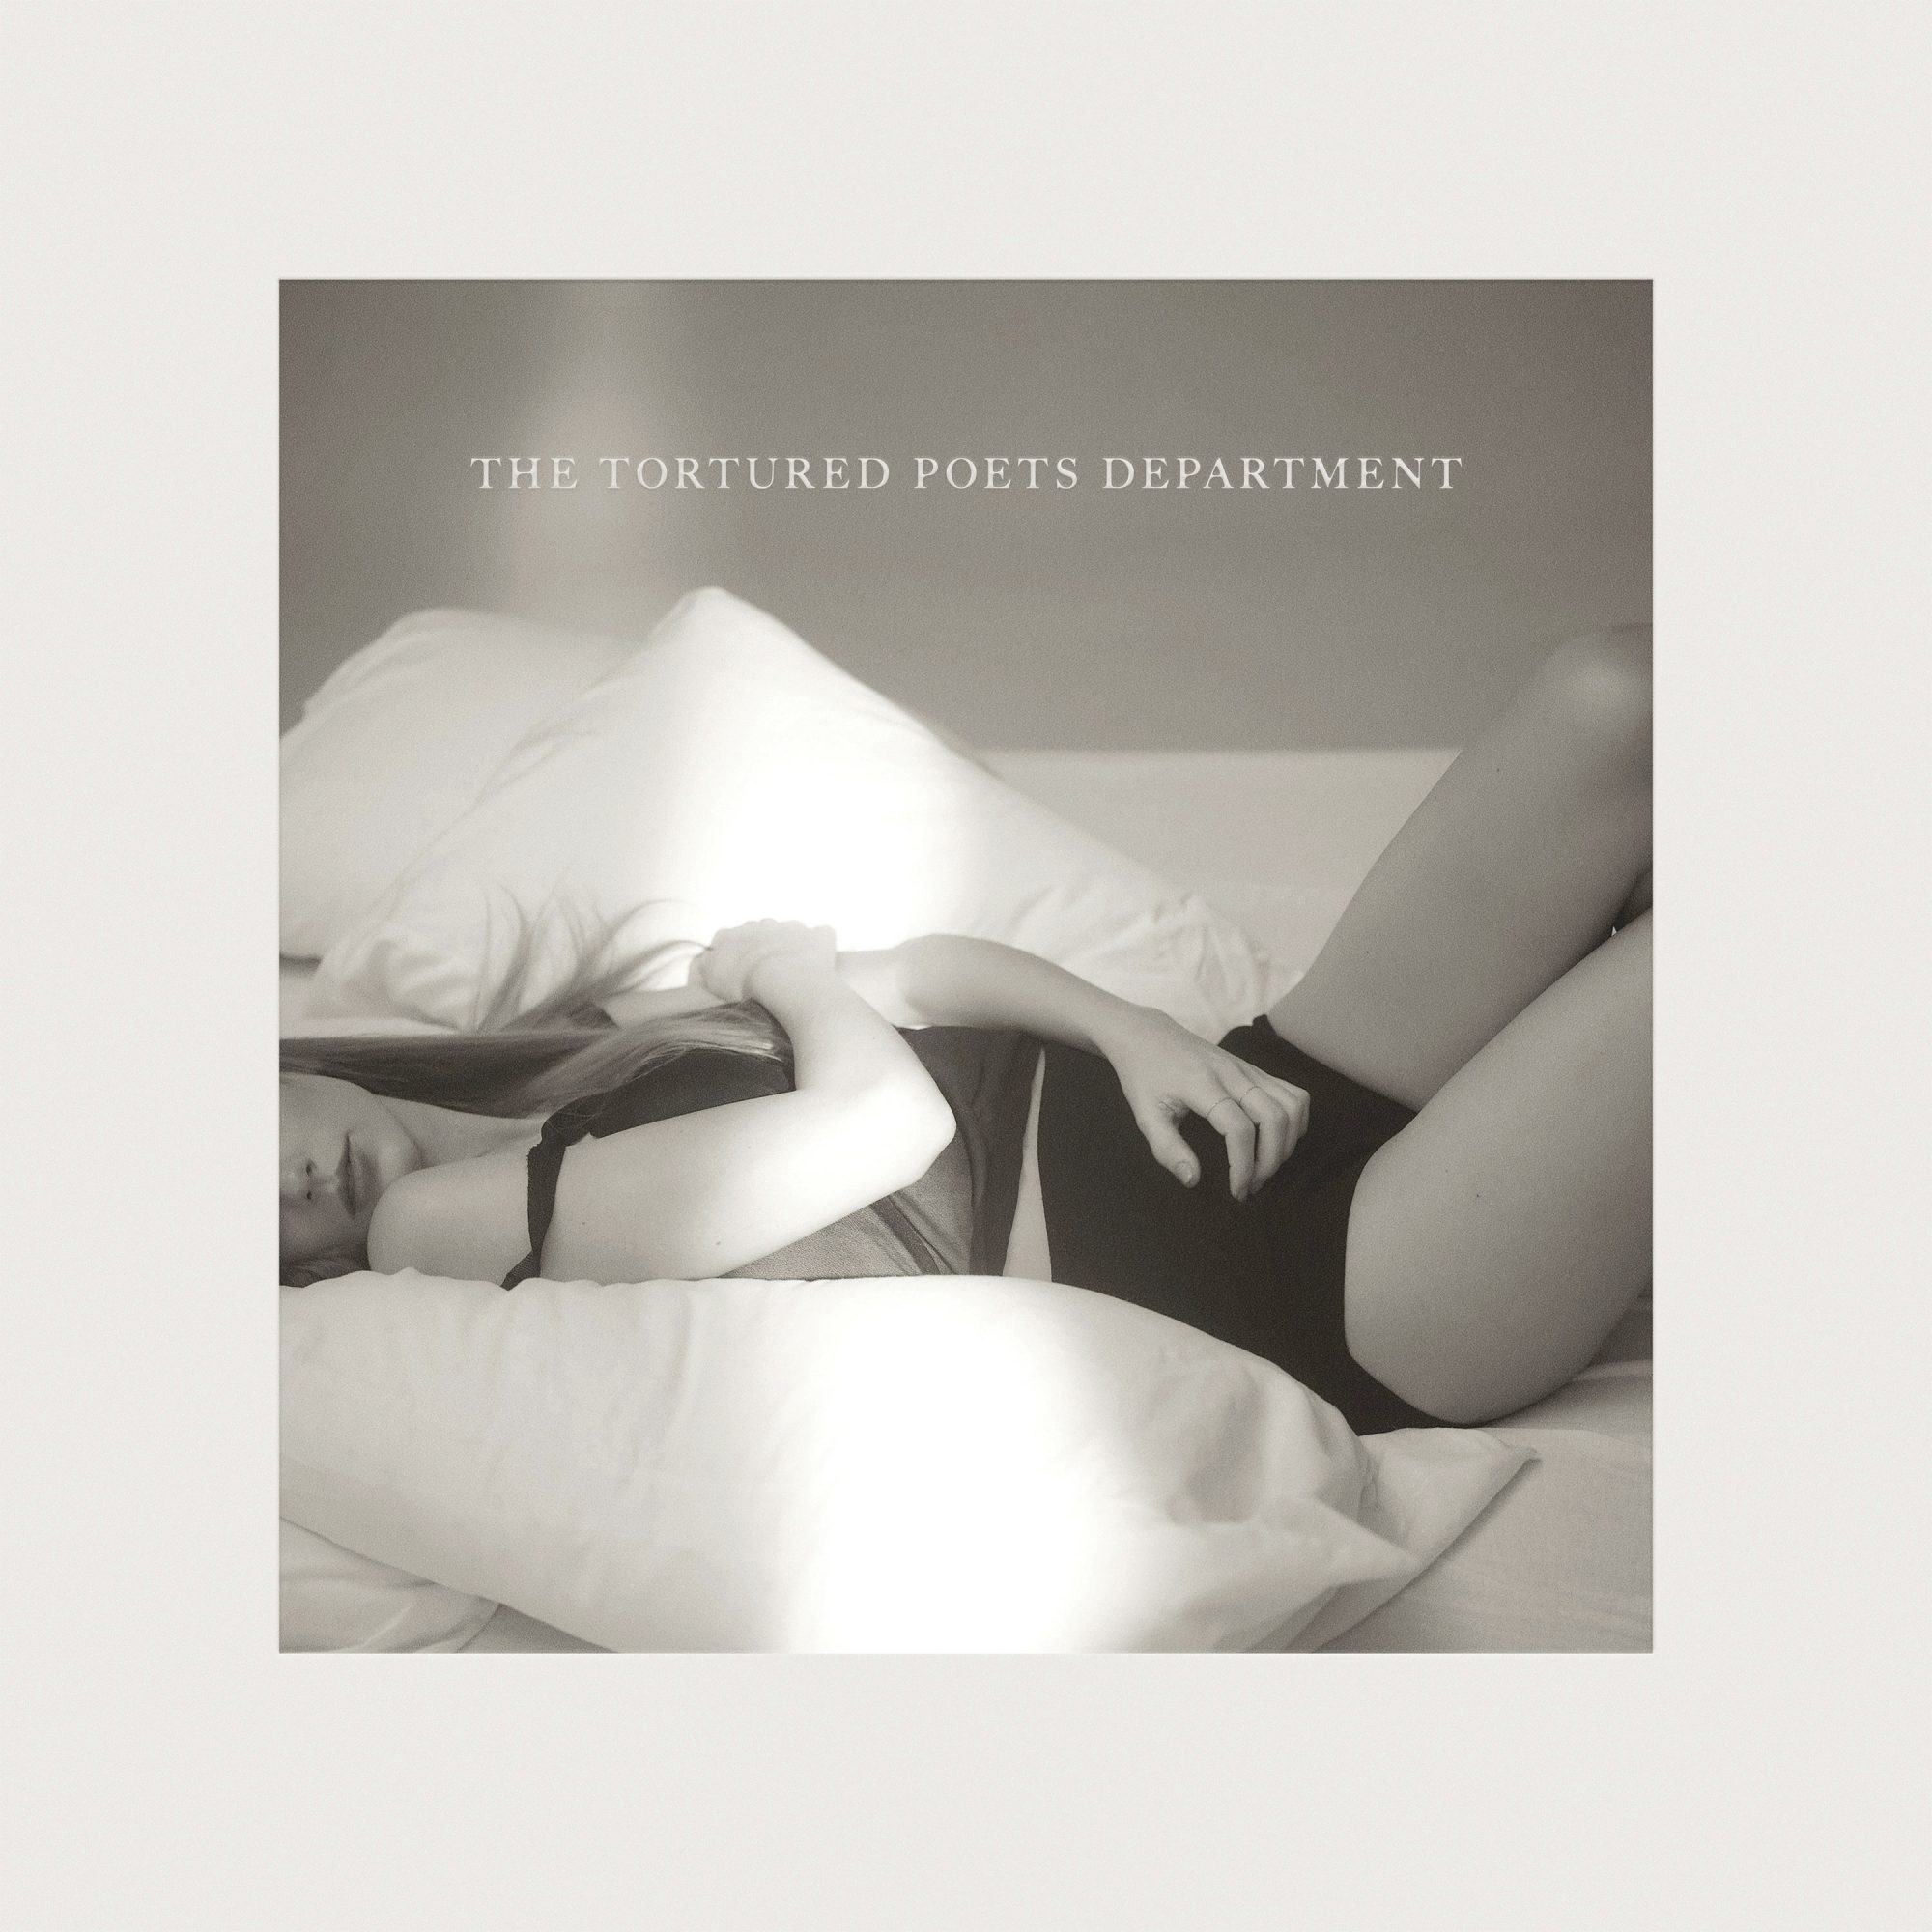 Swift a sorti son 11ème album studio "The Tortured Poets Department" le 19 avril.